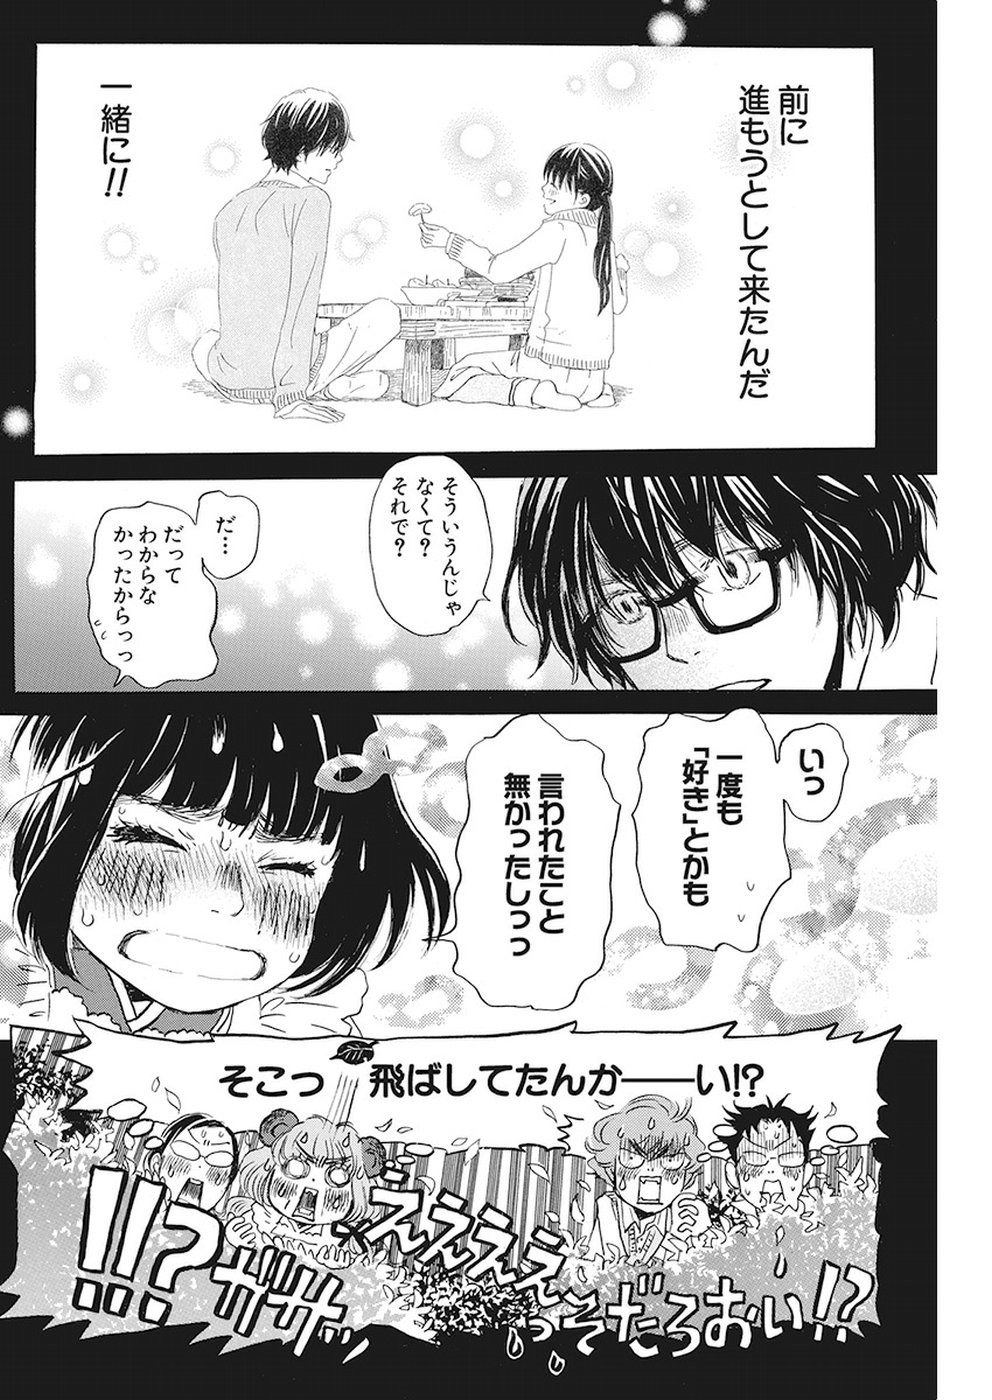 3 Gatsu no Lion - Chapter 155 - Page 8